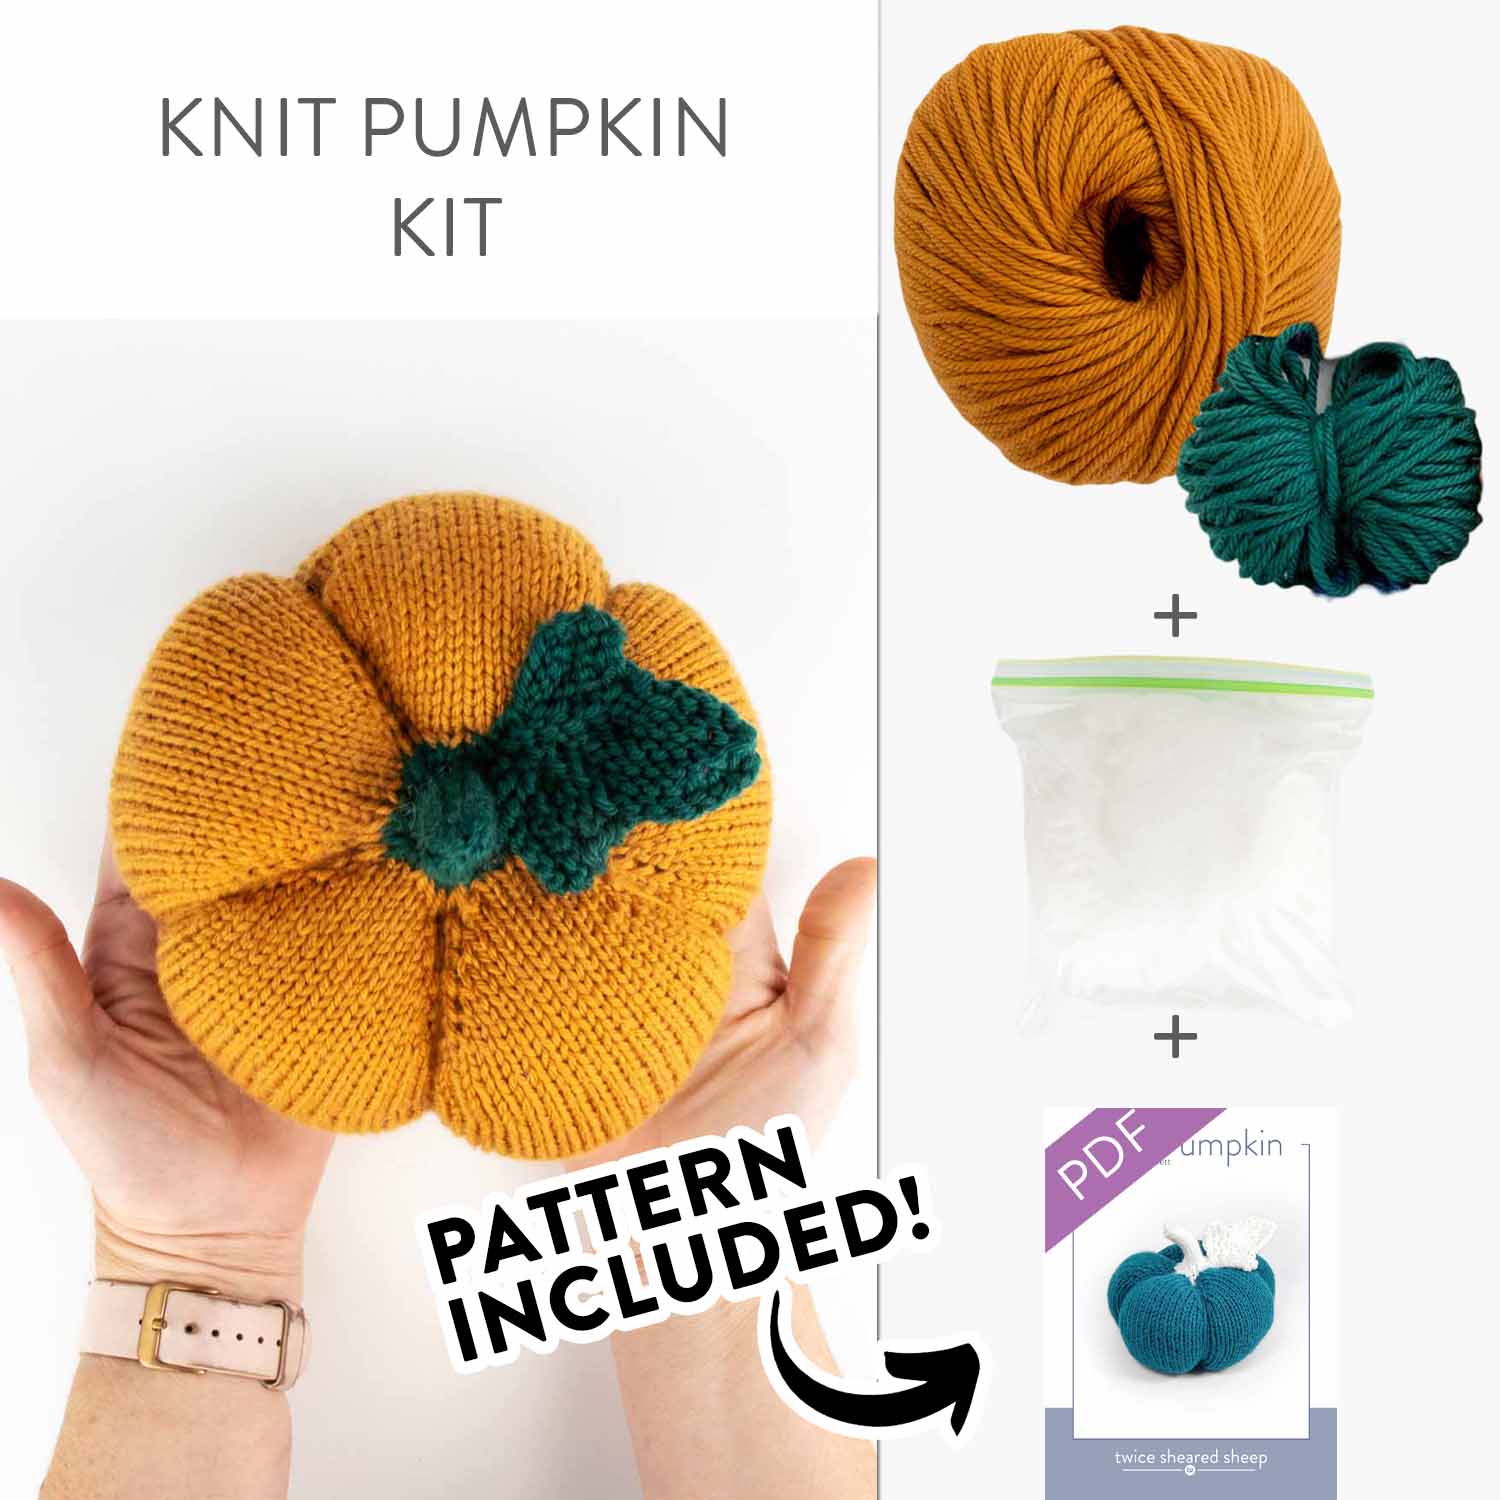 Thea Bag Crochet Yarn Kit